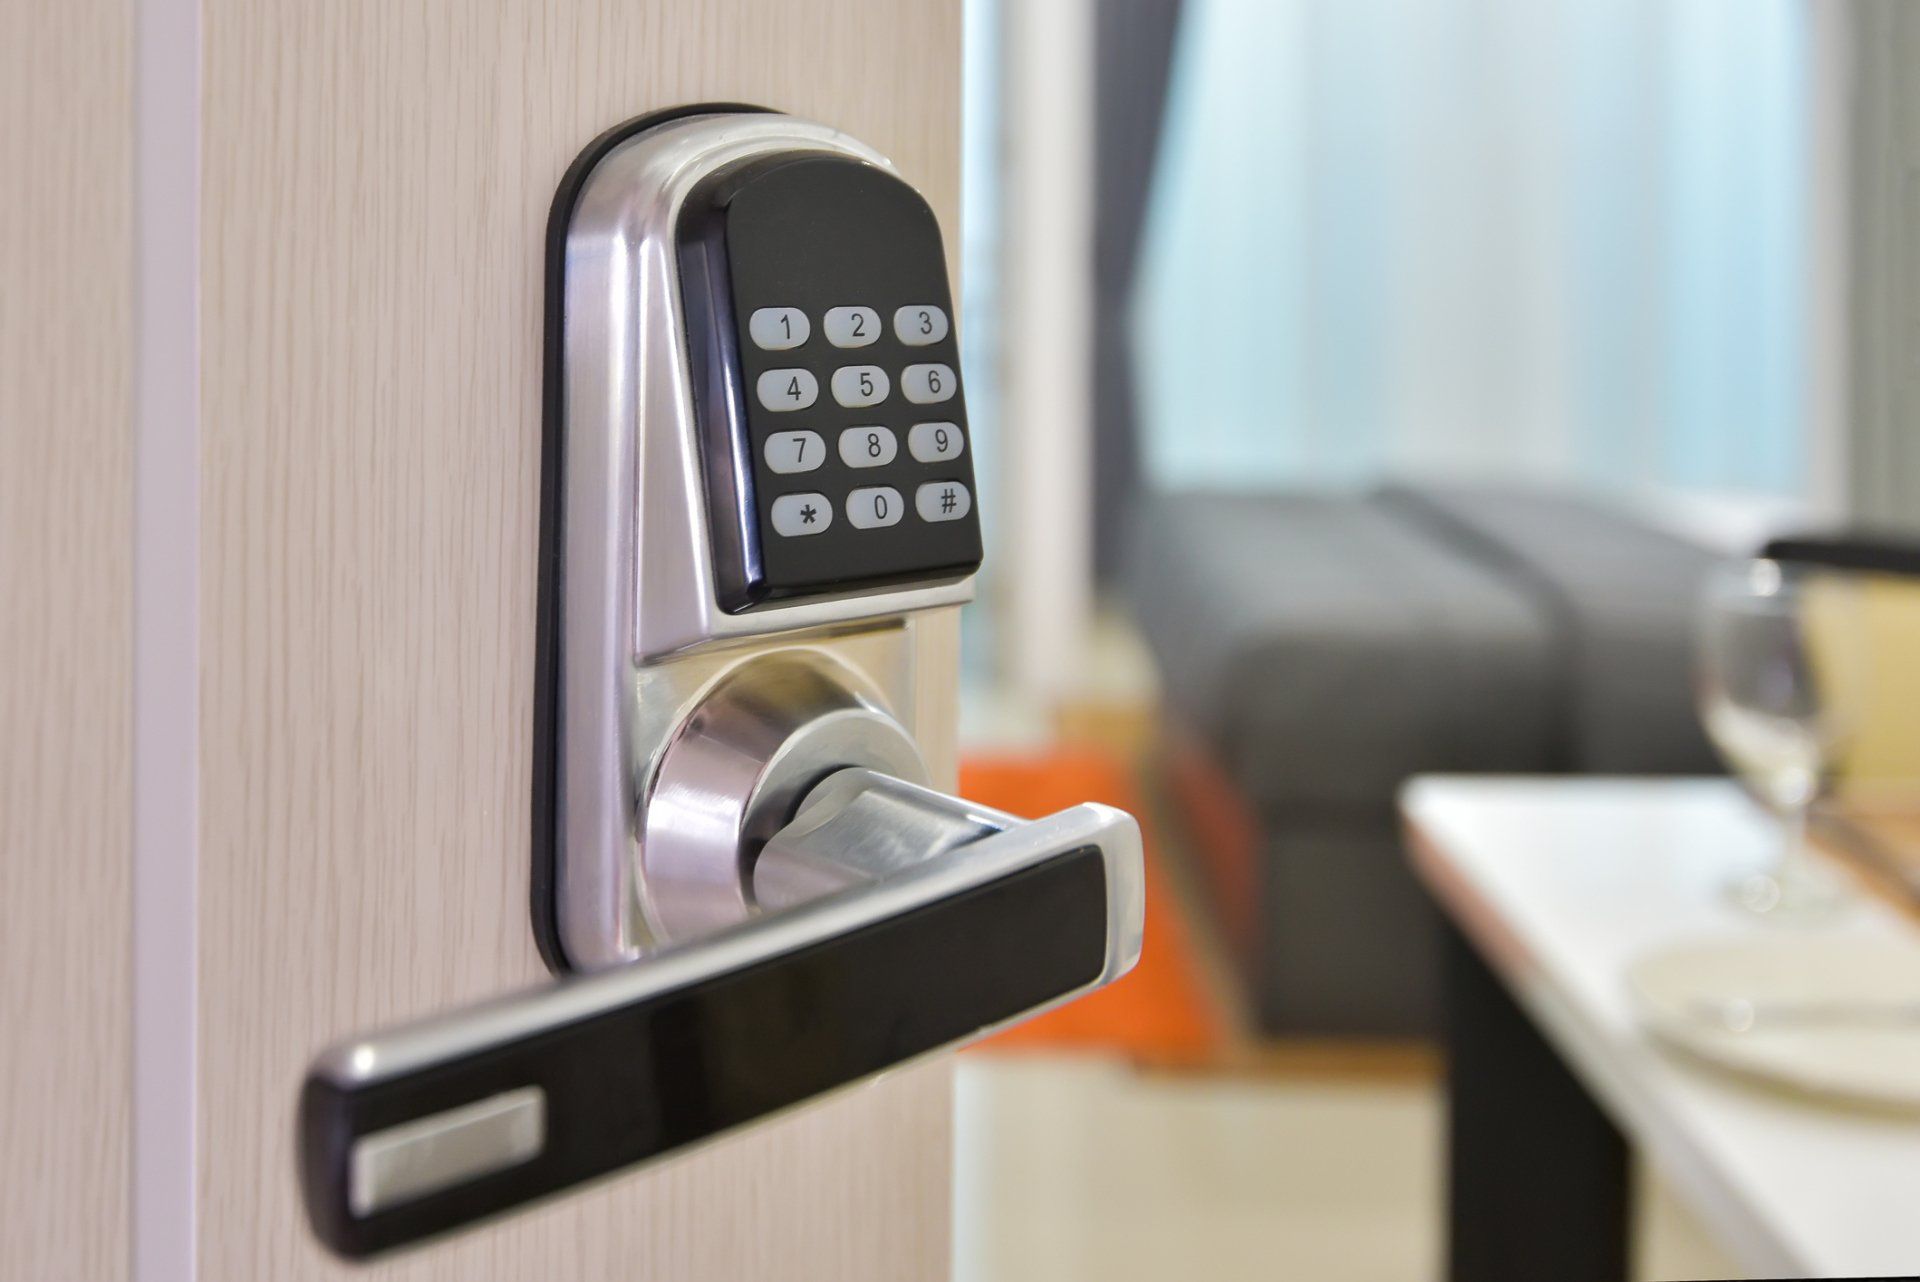 Electronic Door Access Control System Machine — High Quality Locks in Boca Raton, FL